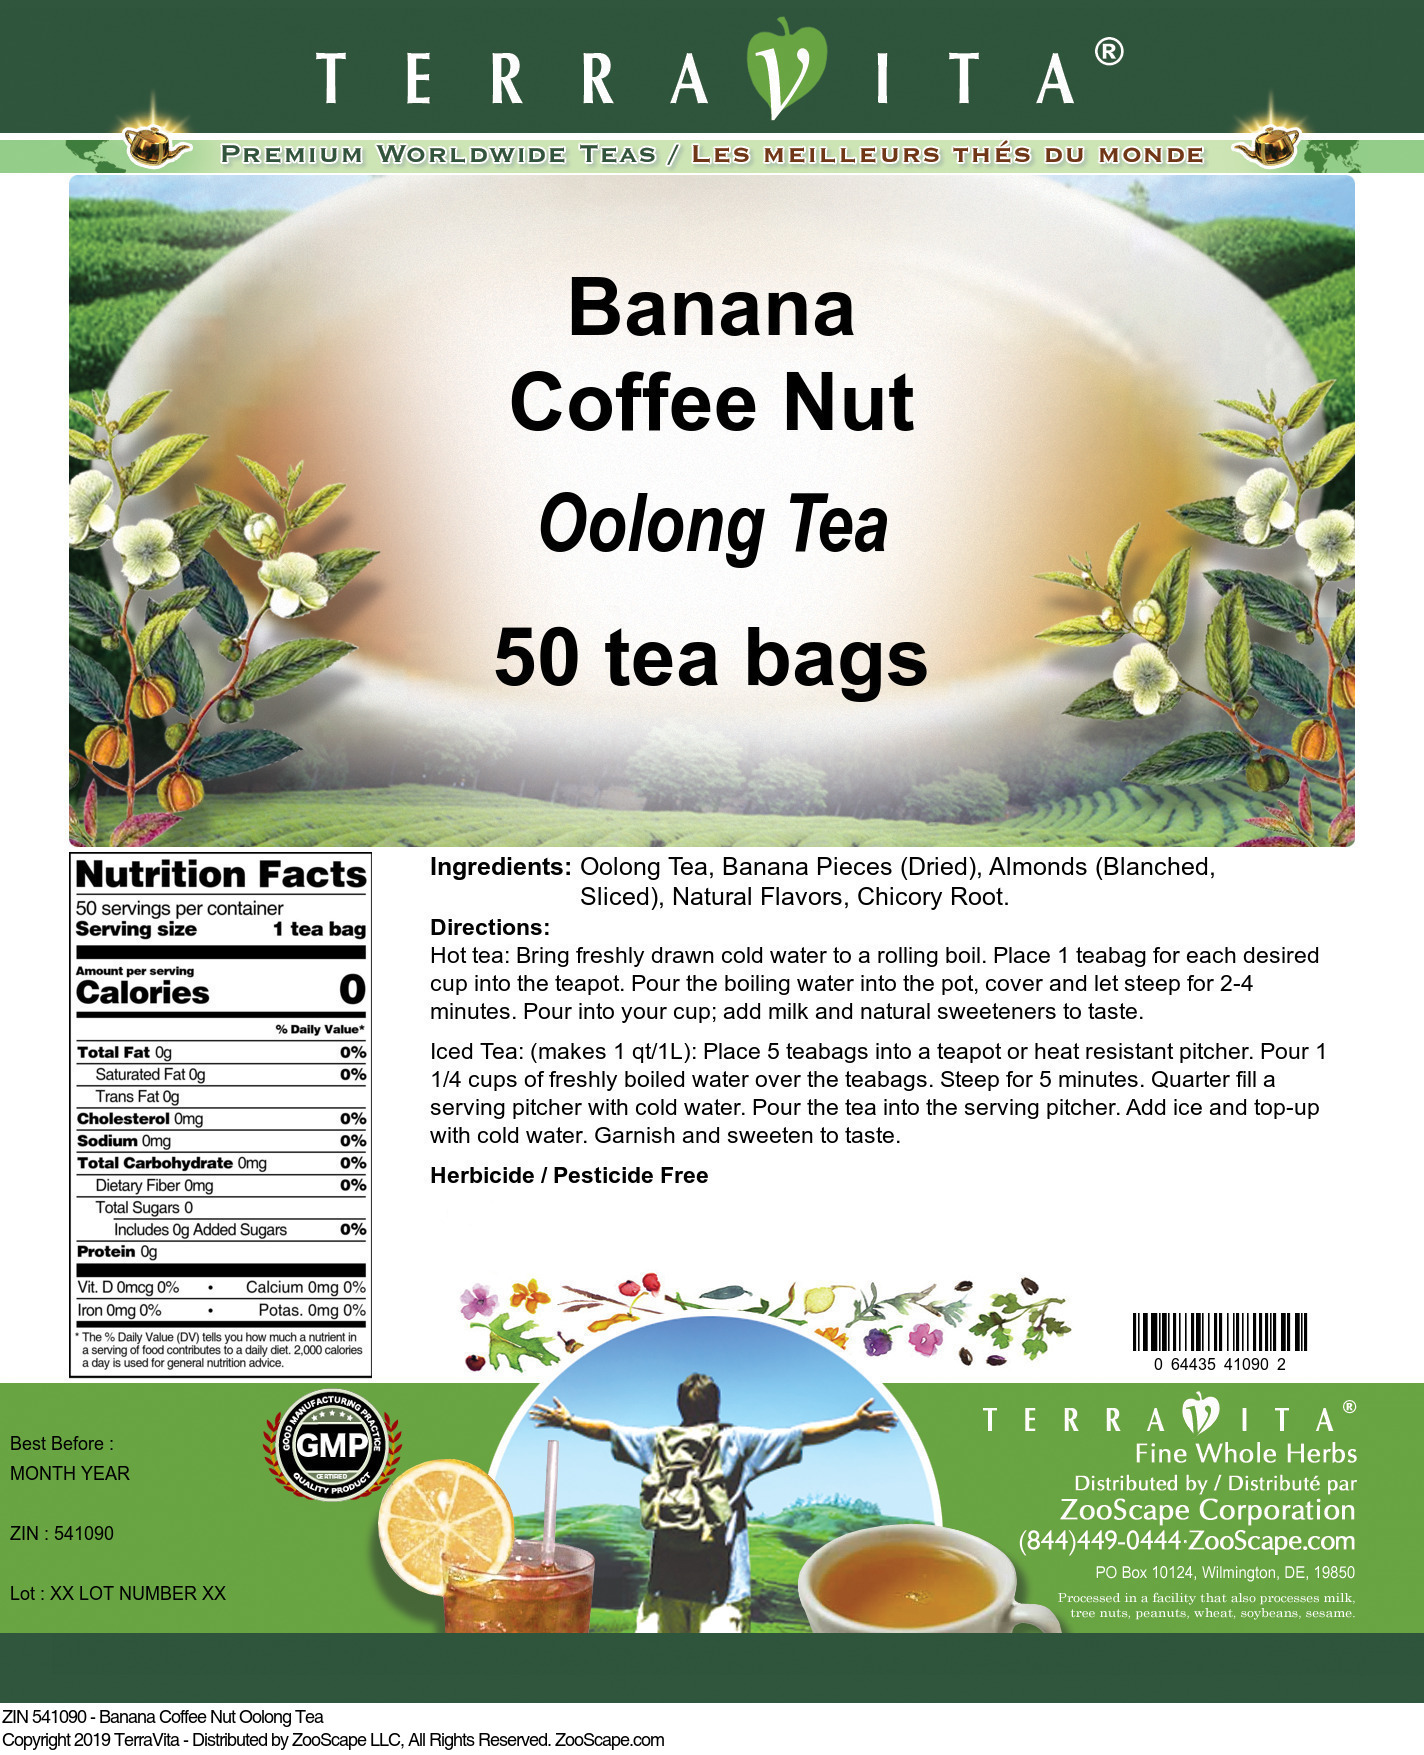 Banana Coffee Nut Oolong Tea - Label